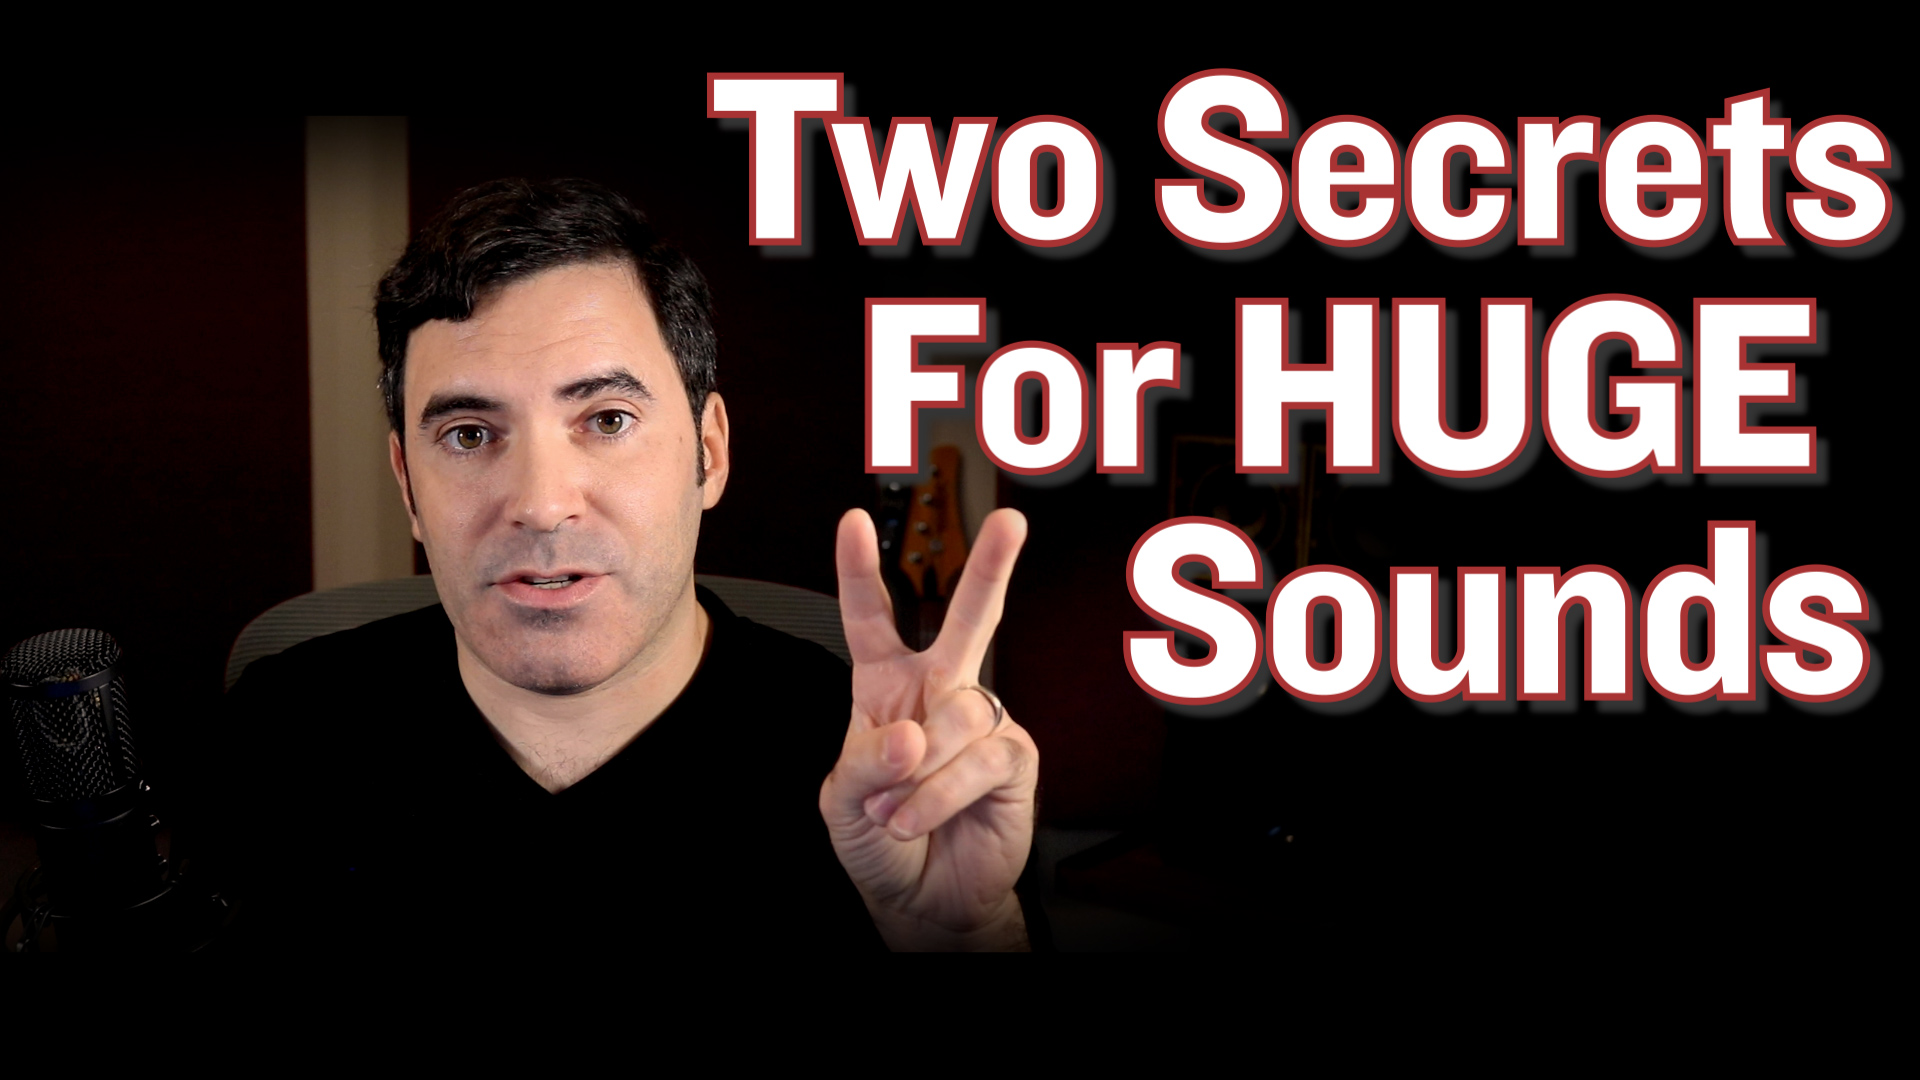 Two Secrets for HUGE Sounding Mixes